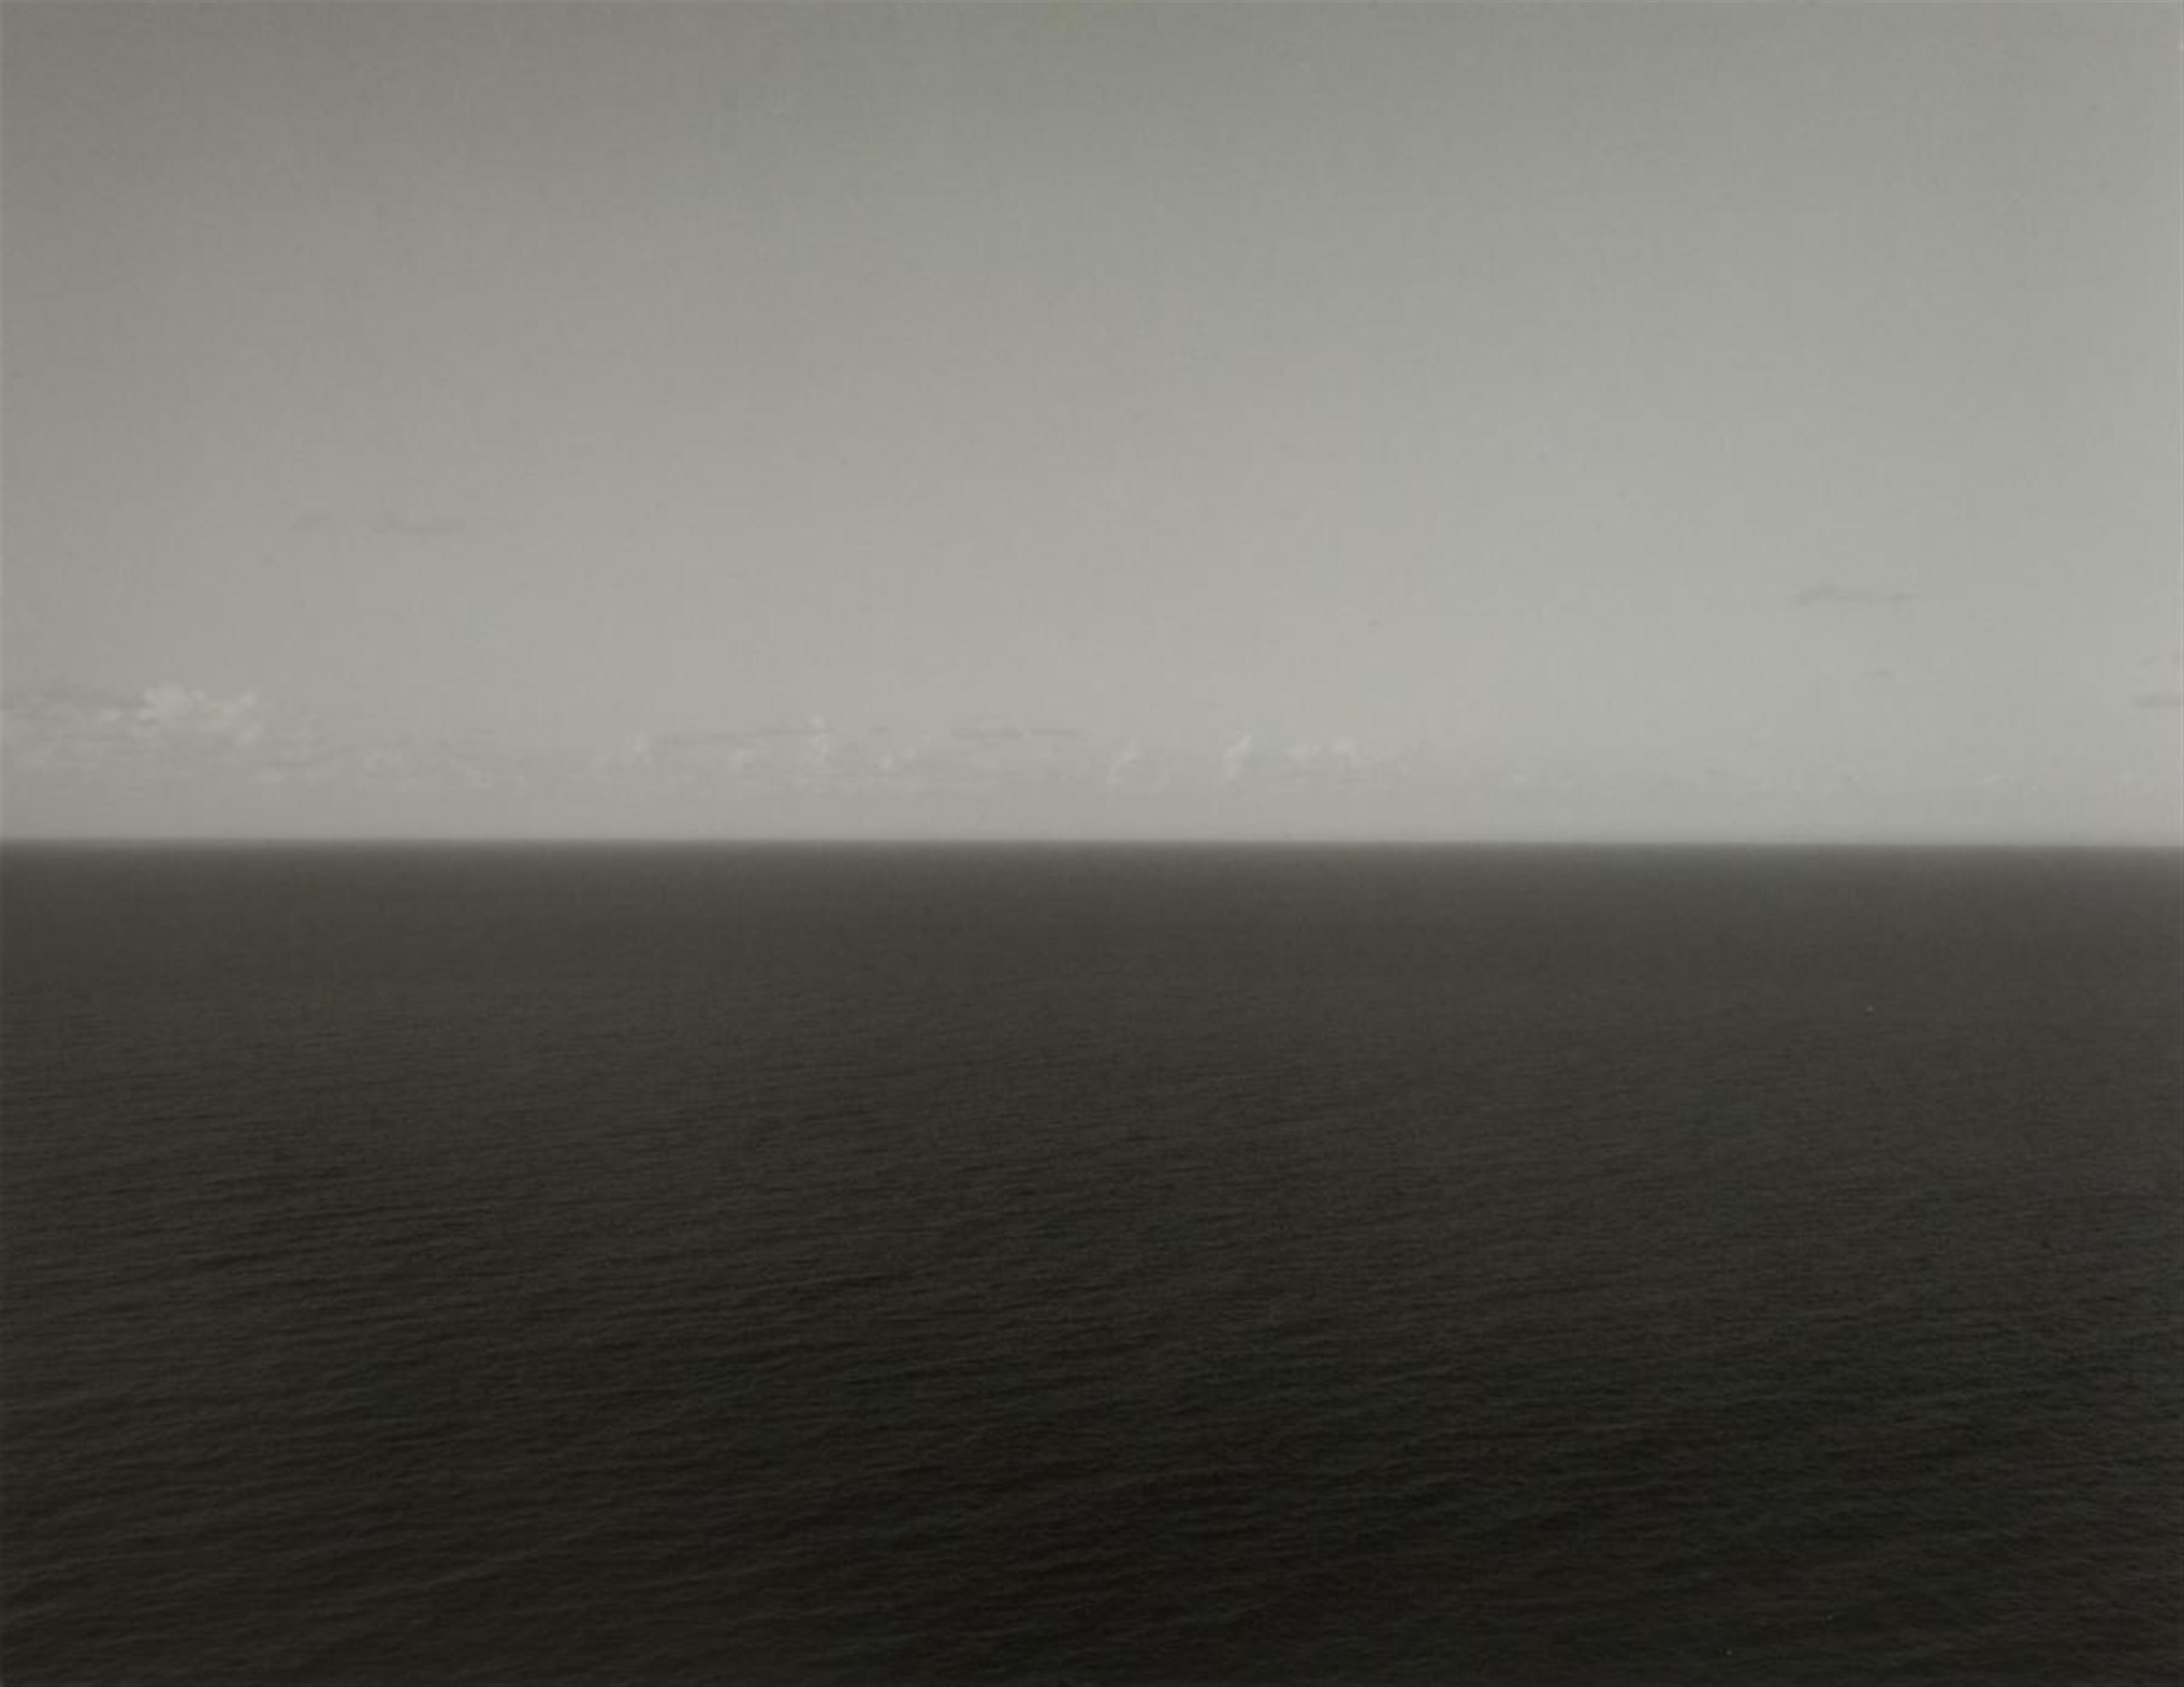 Hiroshi Sugimoto - BAY OF BISCAY, BAKIO BLACK SEA, OZULUCE BACK SEA, OAKBAYIR (# 363, 365 UND 368, AUS: TIME EXPOSED) - image-2